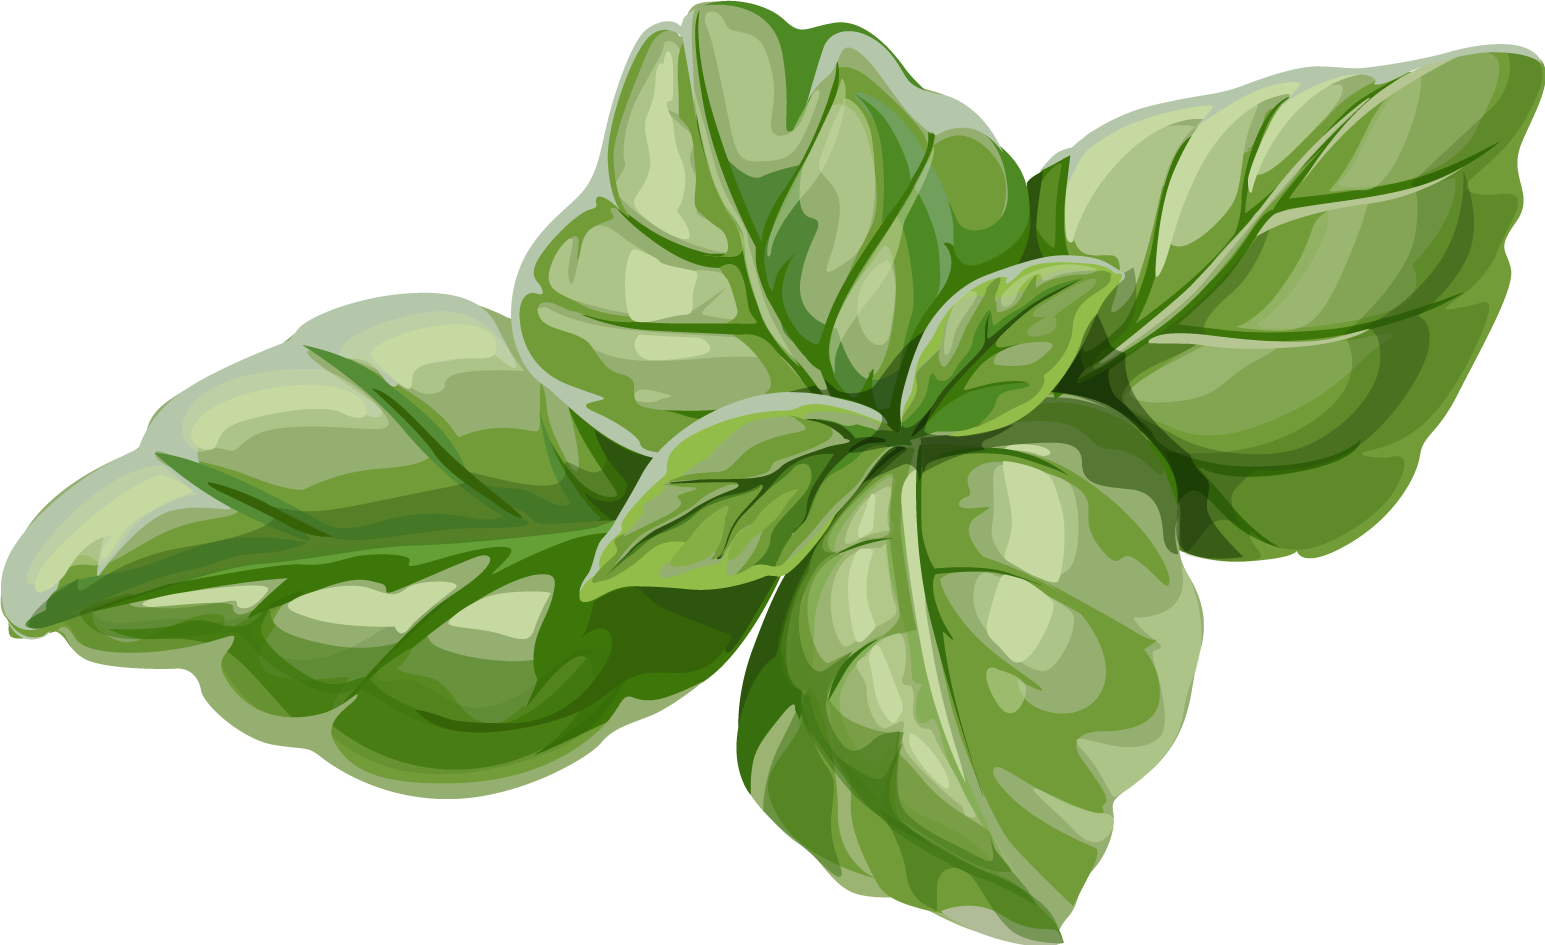 Fresh Basil Leaves Illustration PNG